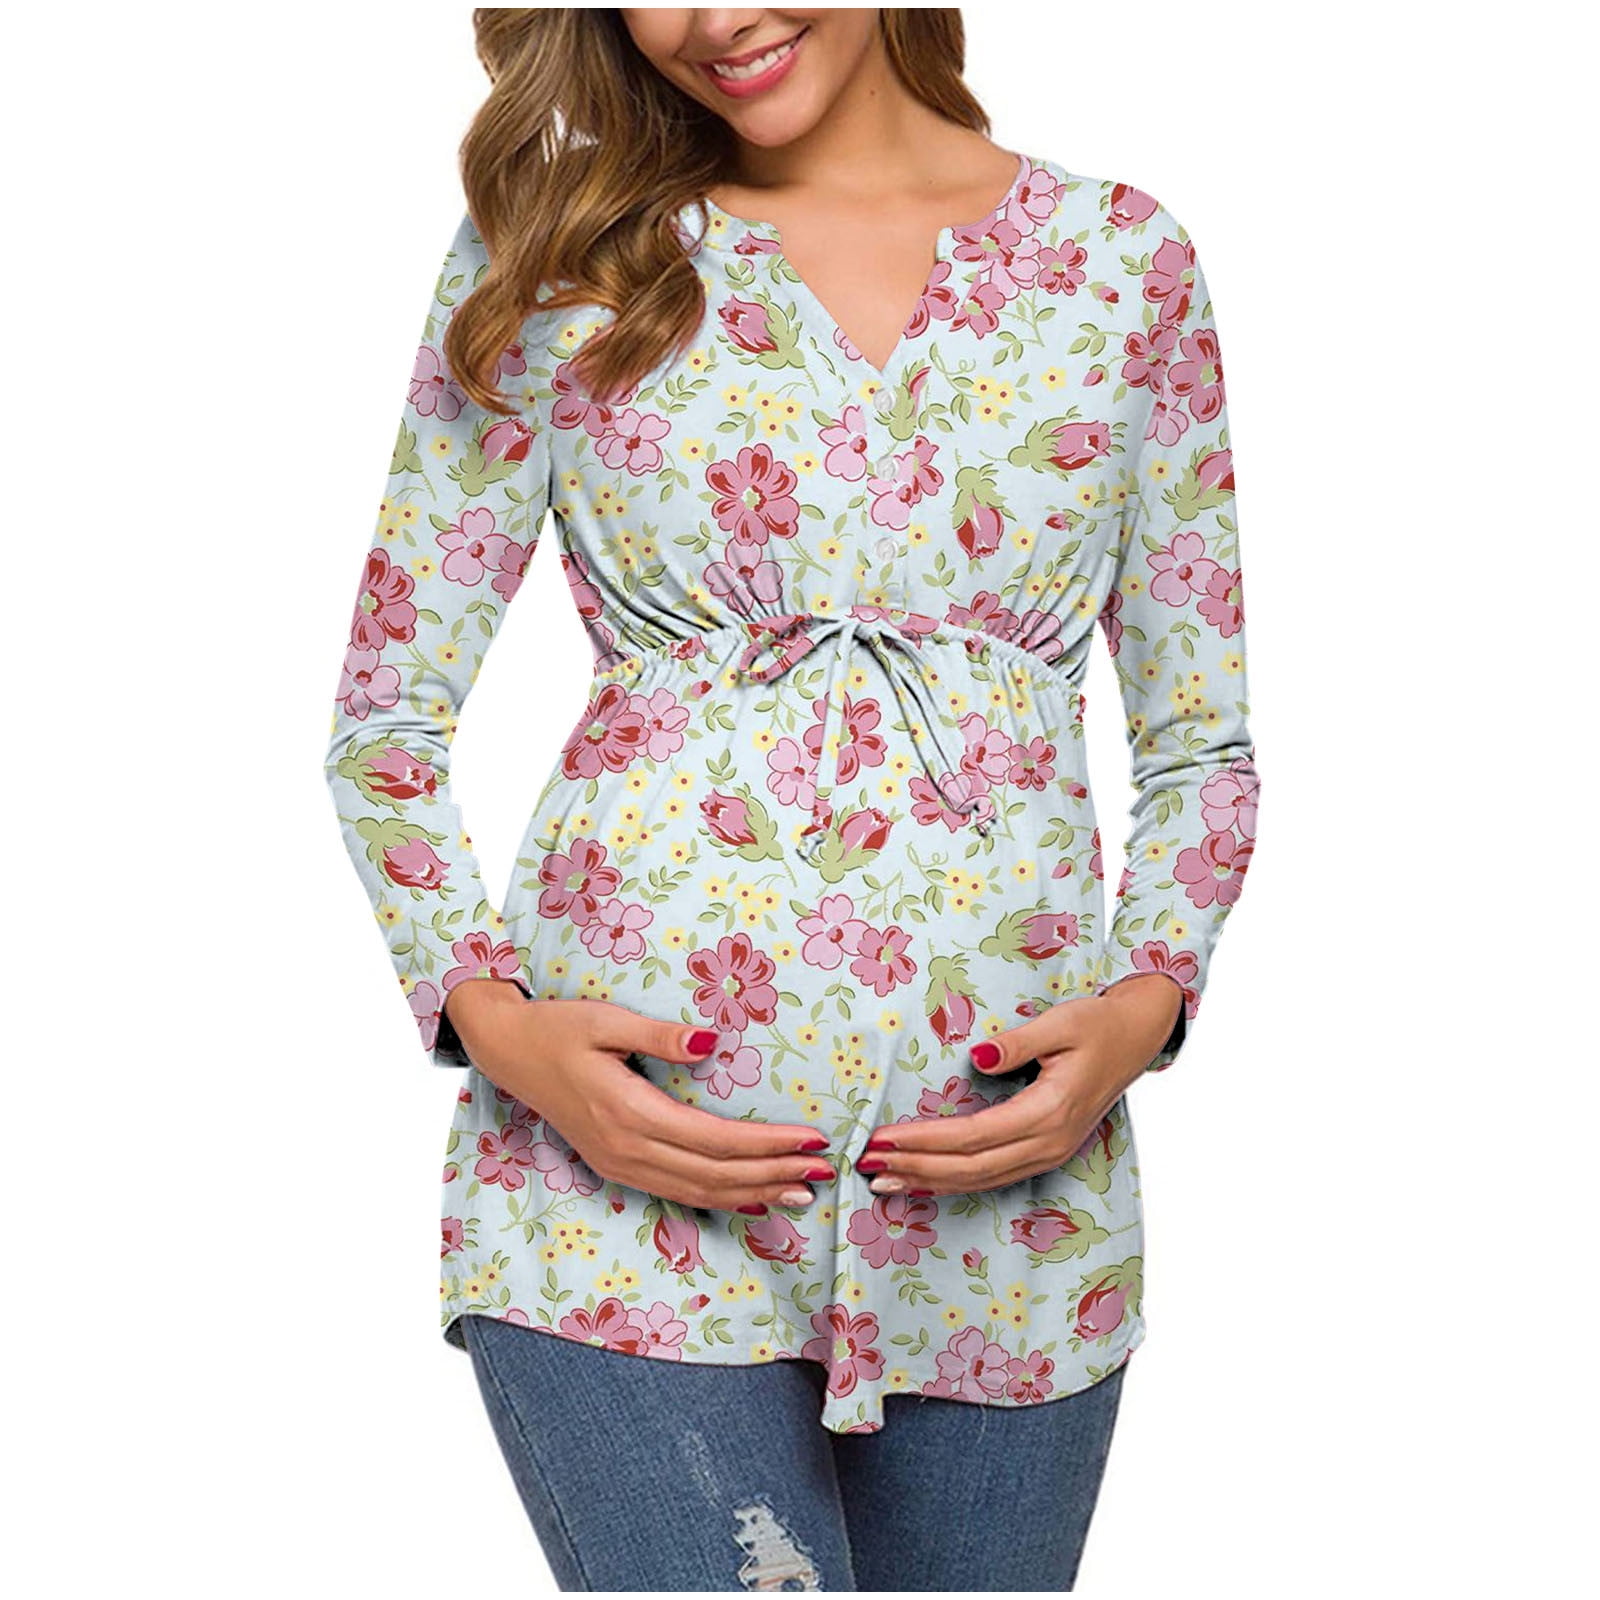 Shop Best Maternity Tops For Sale Online, Cheap Pregnancy Tops